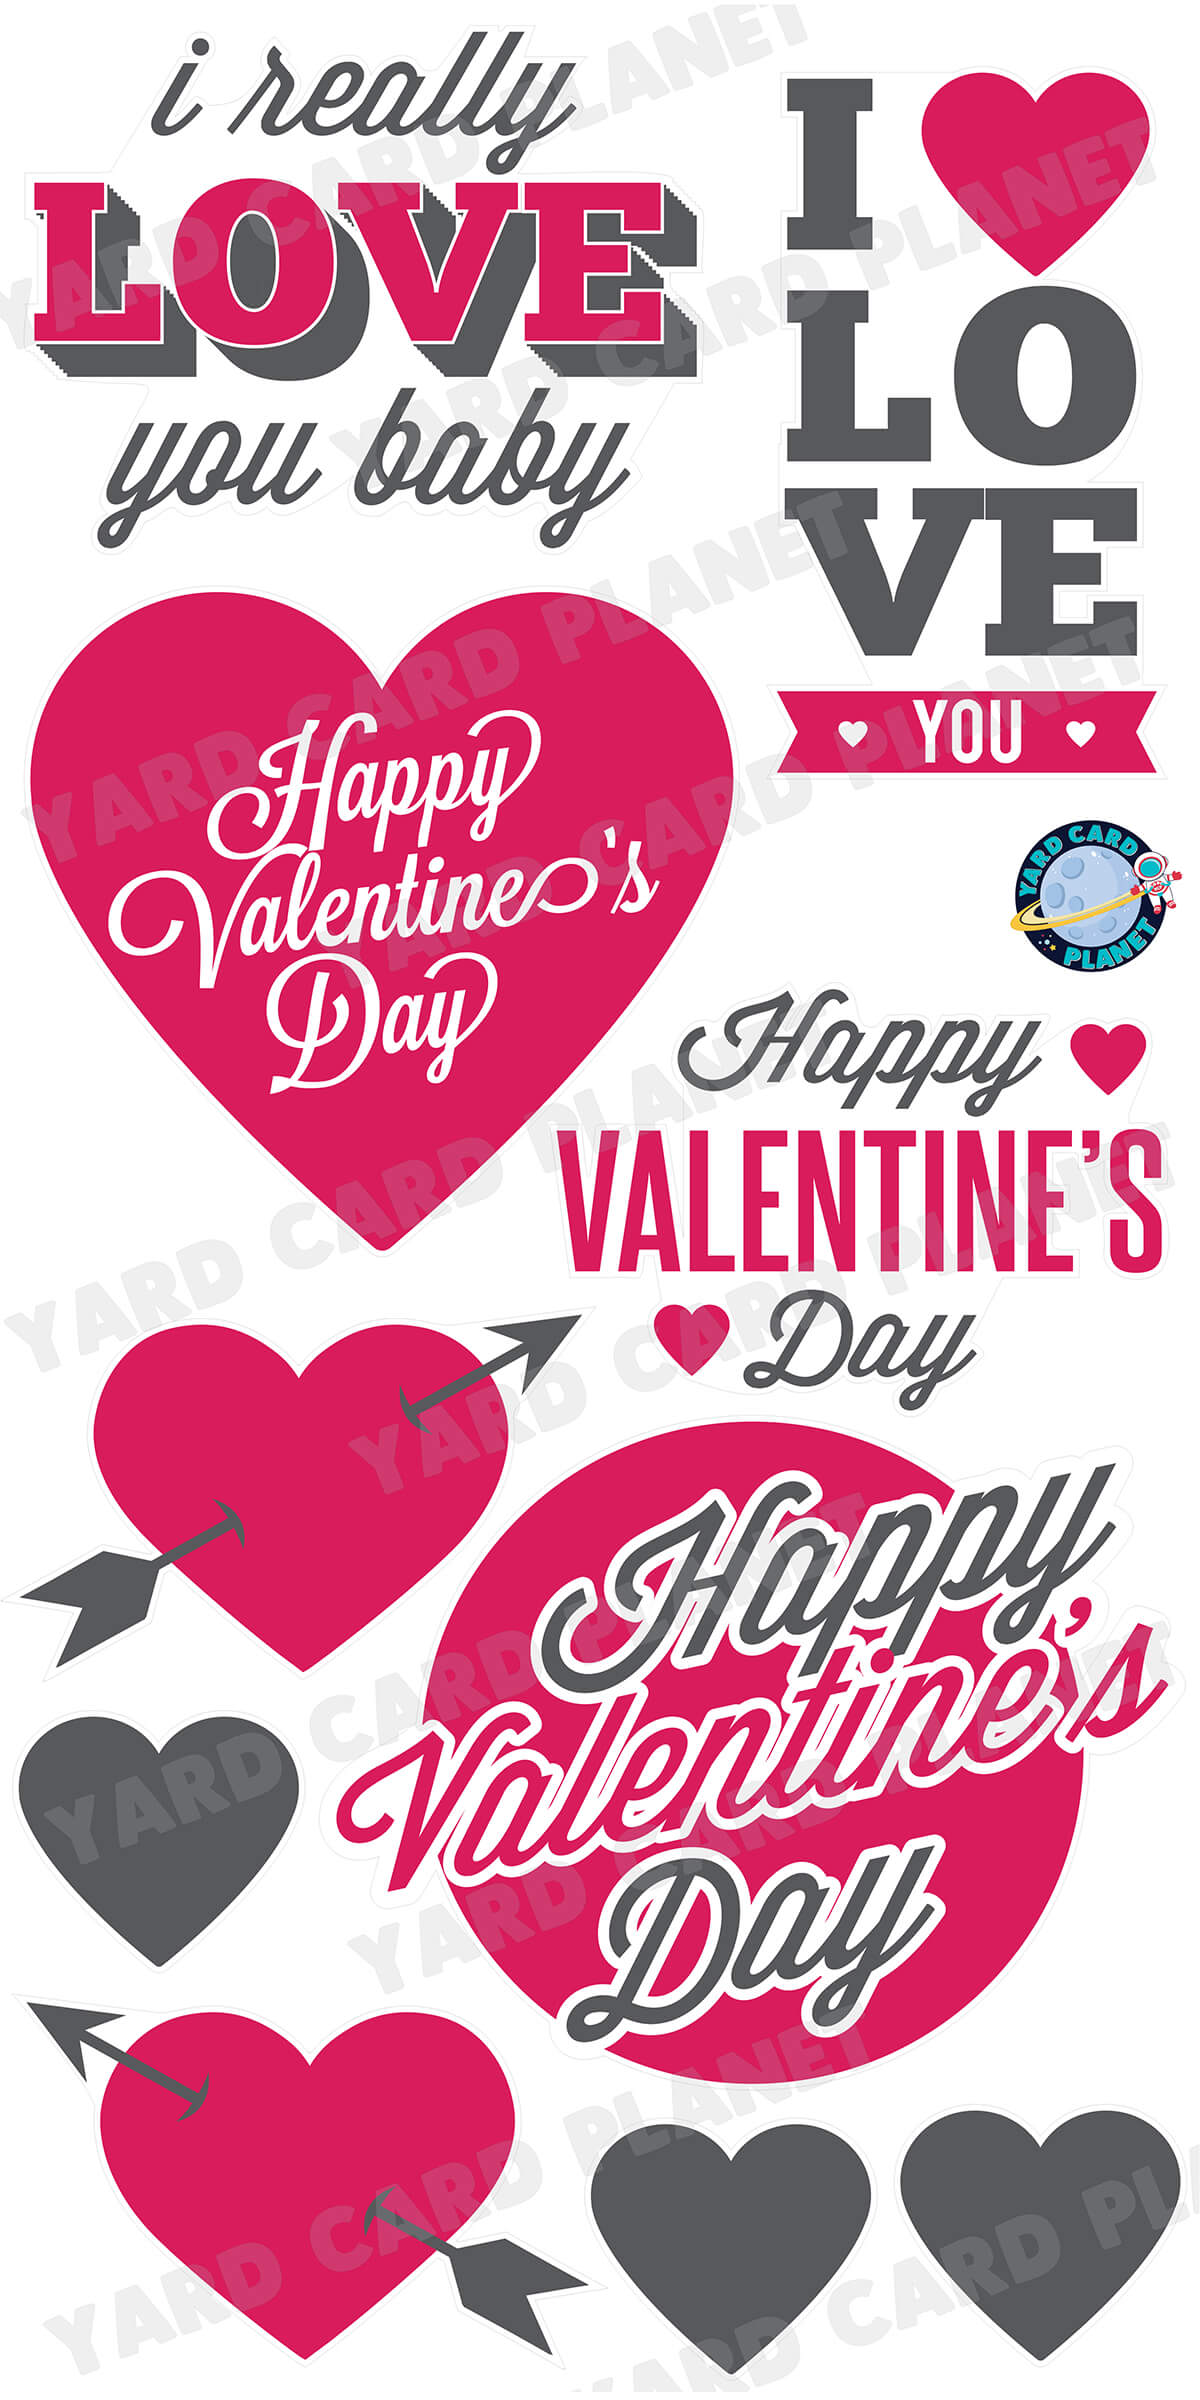 Happy Valentine's Day: St. Valentine's Day Card